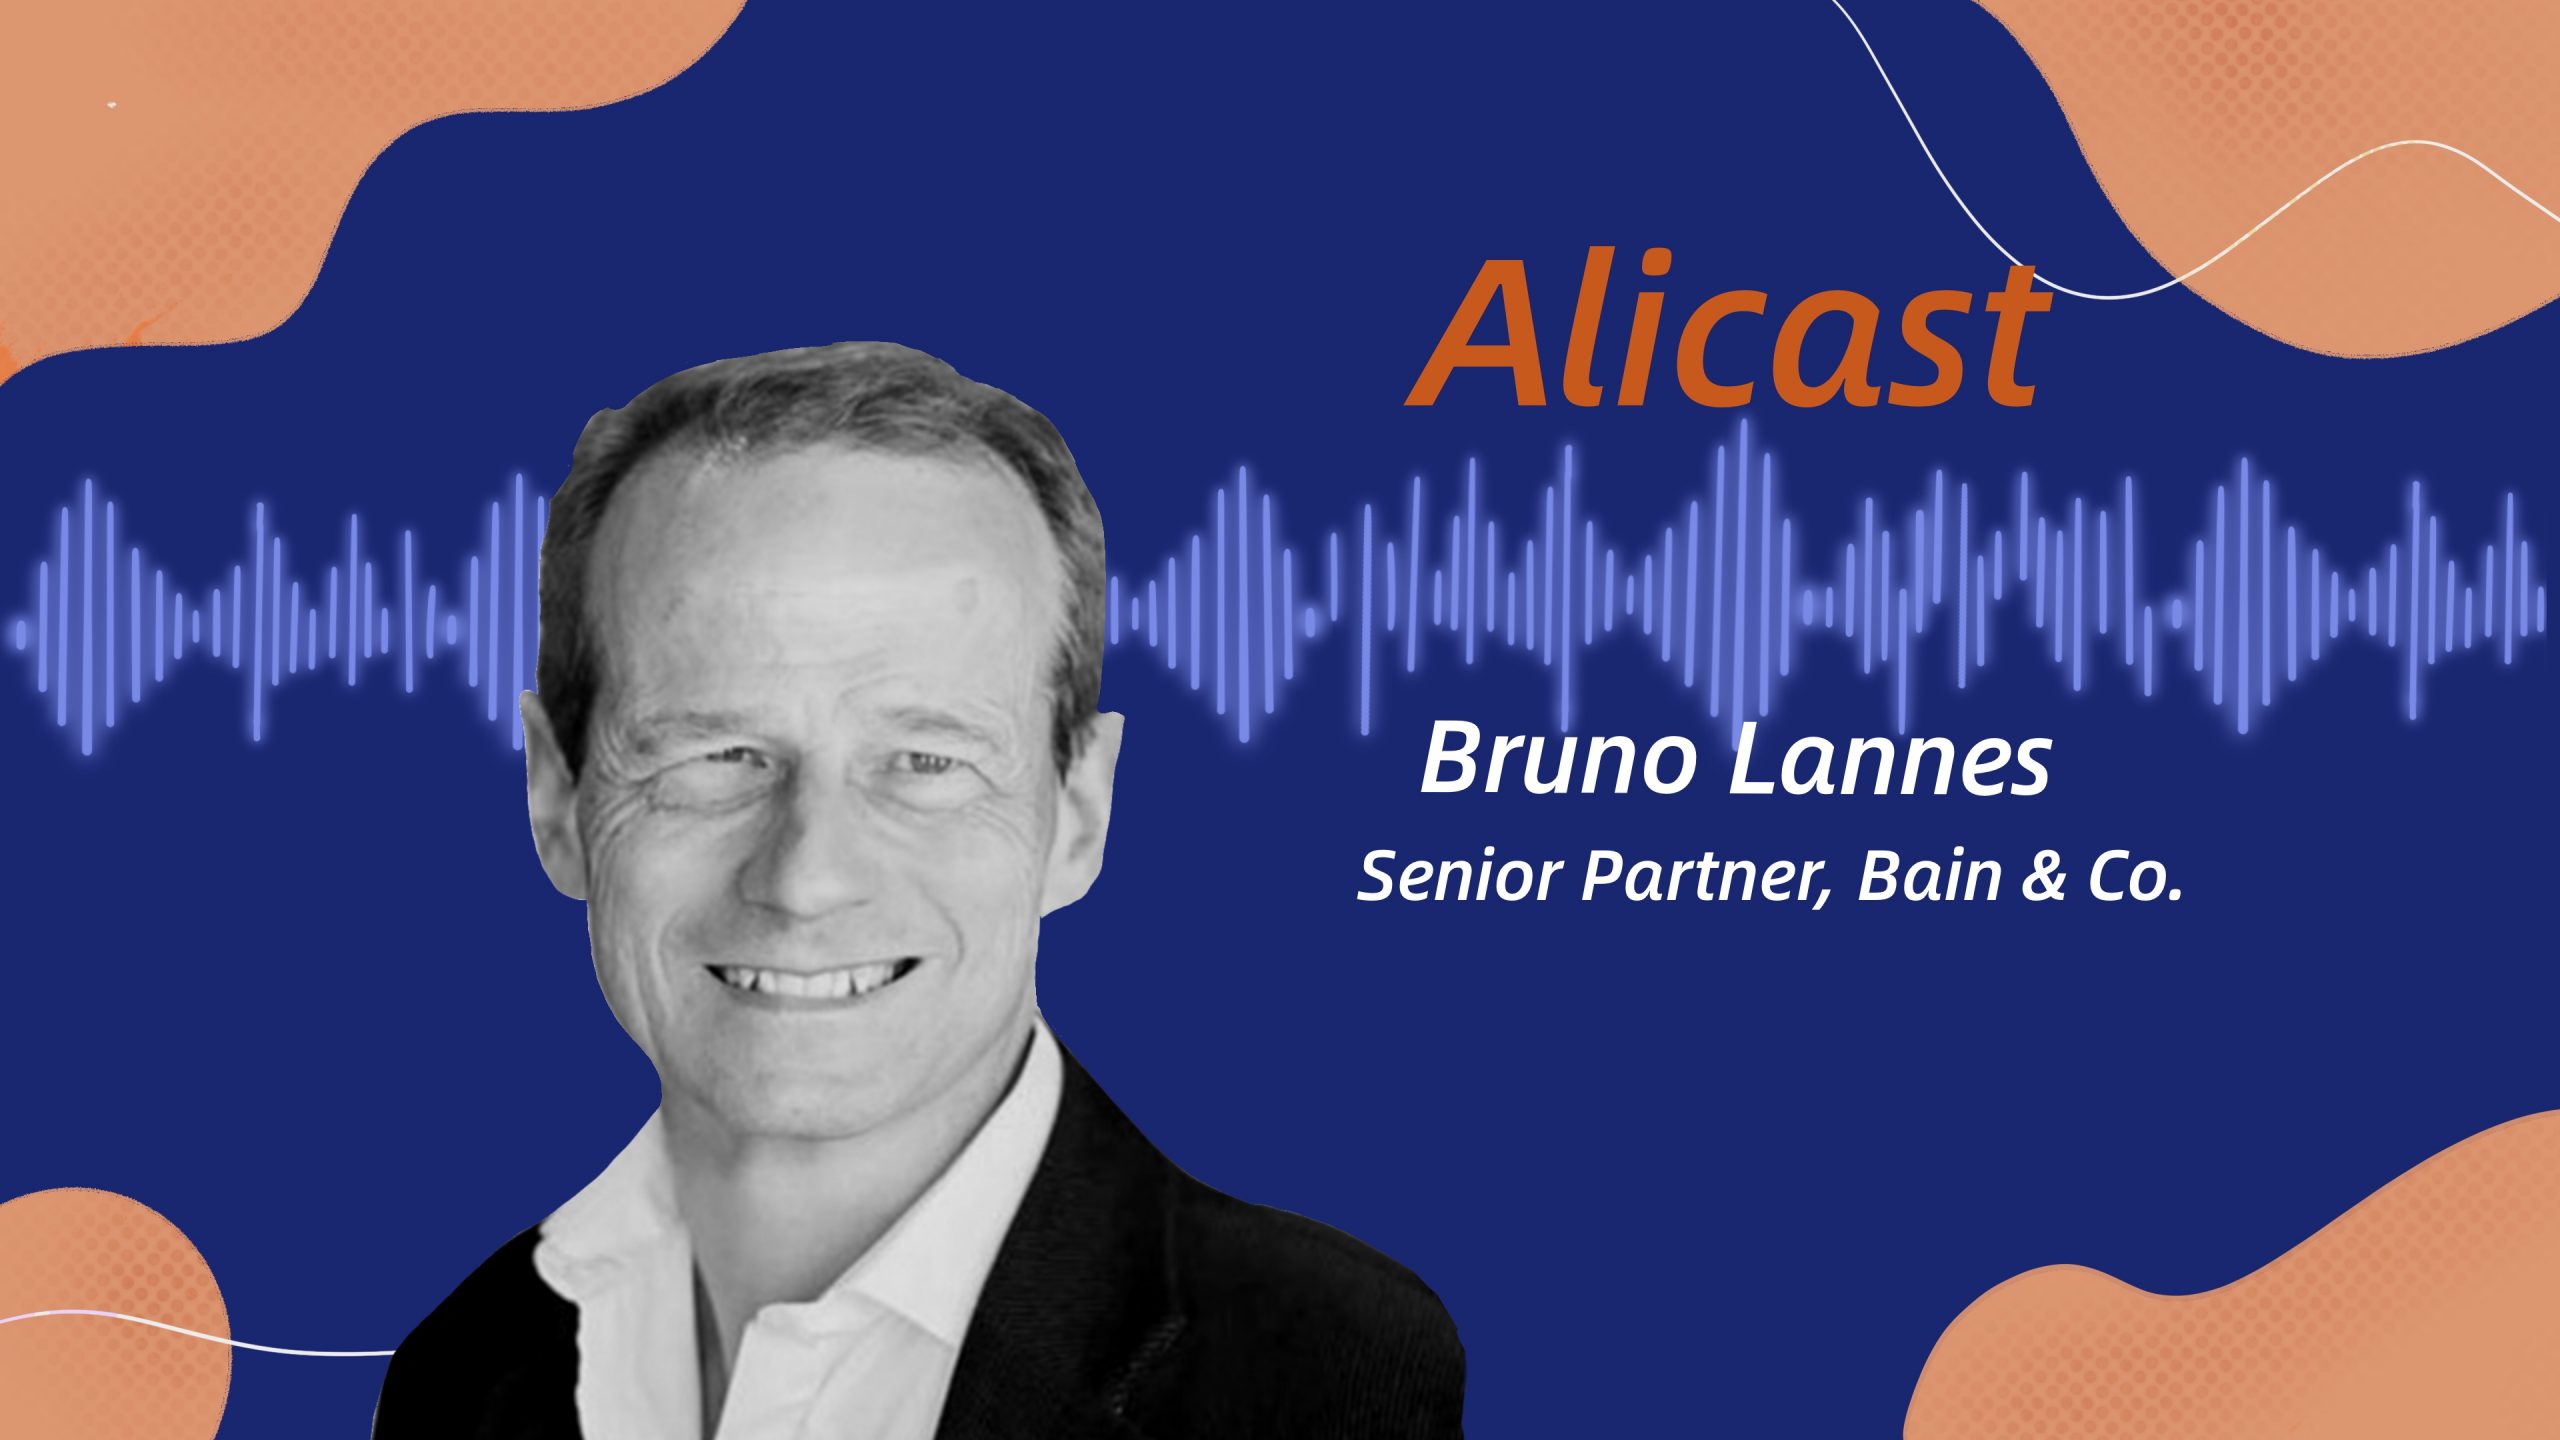 Bruno-Lannes-Alicast-Rectangle-scaled